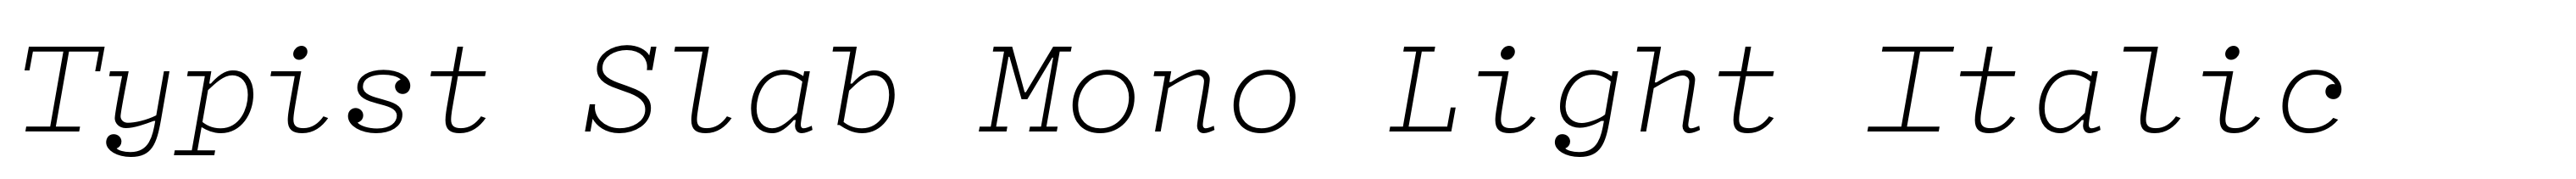 Typist Slab Mono Light Italic